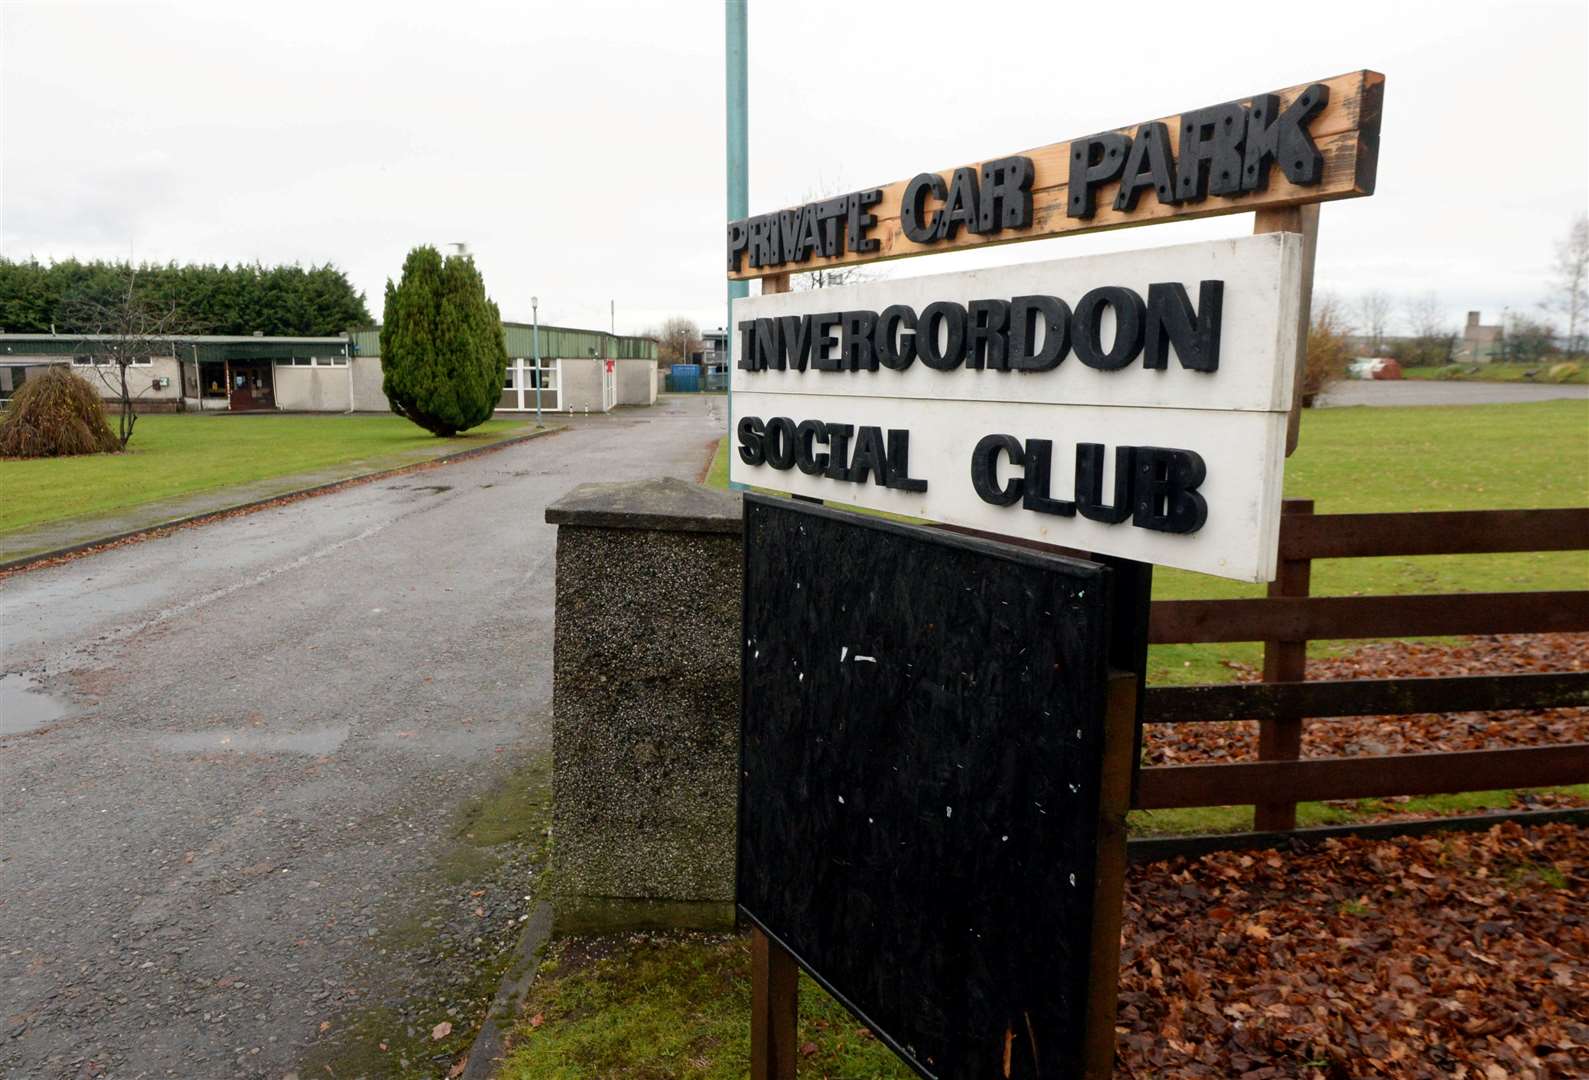 Invergordon Social Club runs walk-in clinics this week on Mondays and Tuesdays.  Photo: James Mackenzie